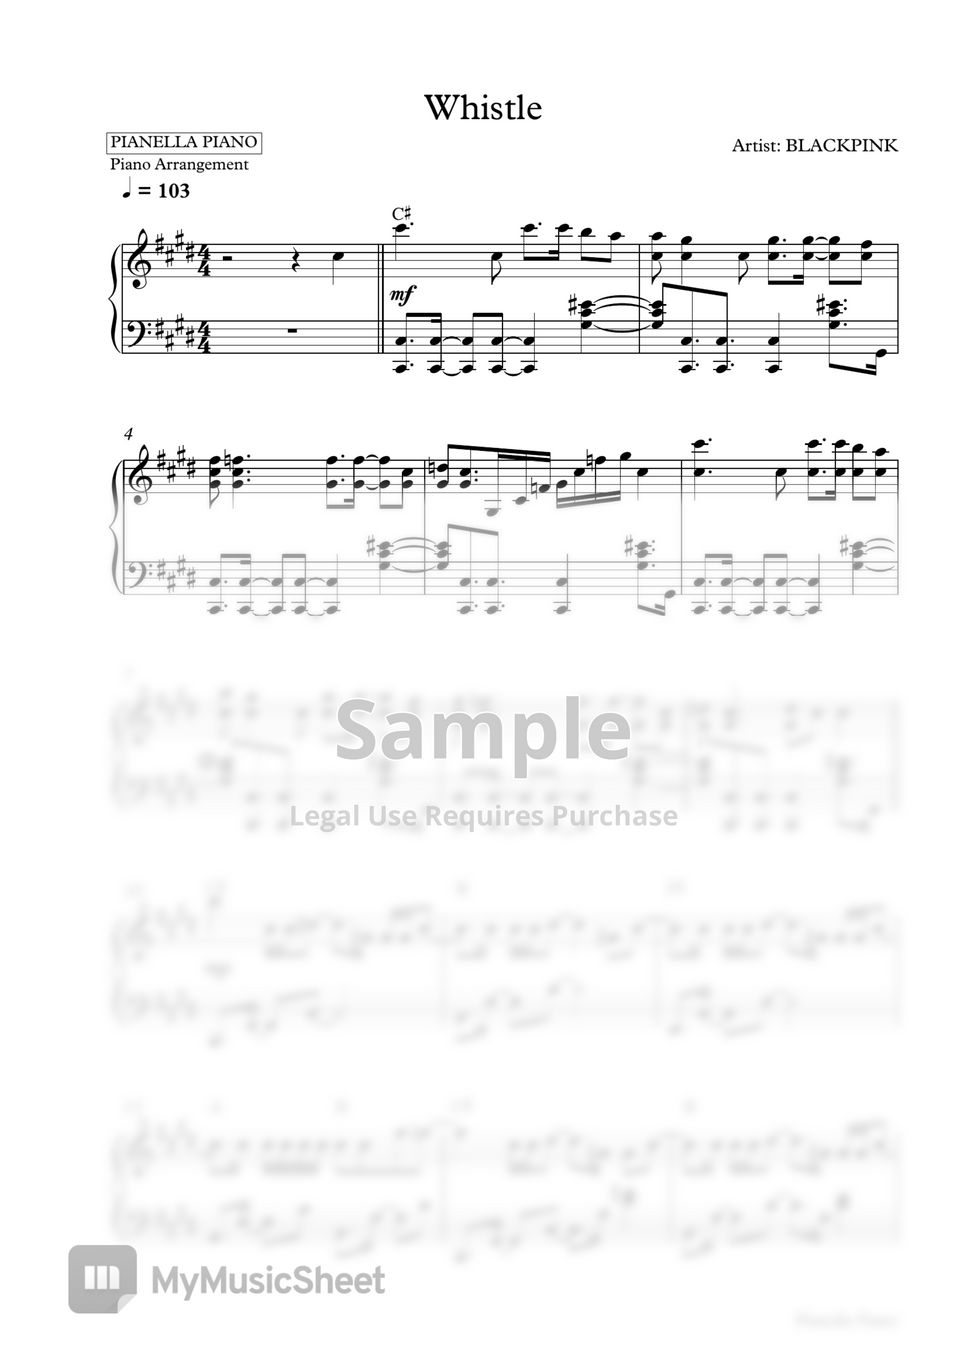 BLACKPINK - WHISTLE (Piano Sheet) by Pianella Piano